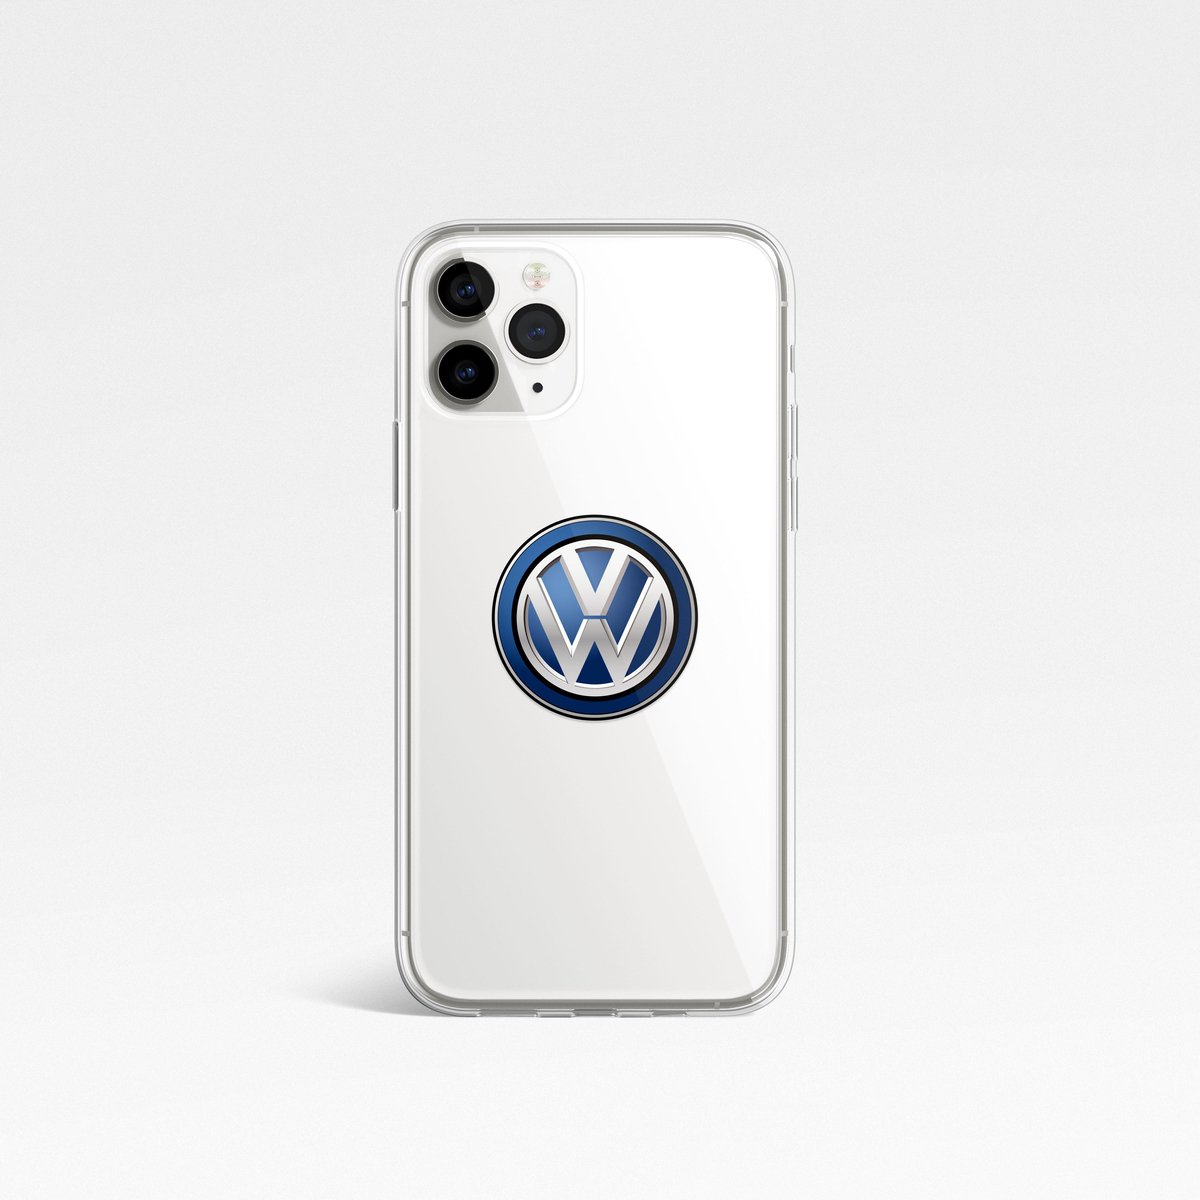 iPhone 12 hoesje - iPhone 12 Pro hoesje - iPhone 12 case - hoesje iPhone 12 - hoesje iPhone 12 Pro - iPhone 12 Pro case - Siliconen hoesje - Transparant - Case met Volkswagen logo